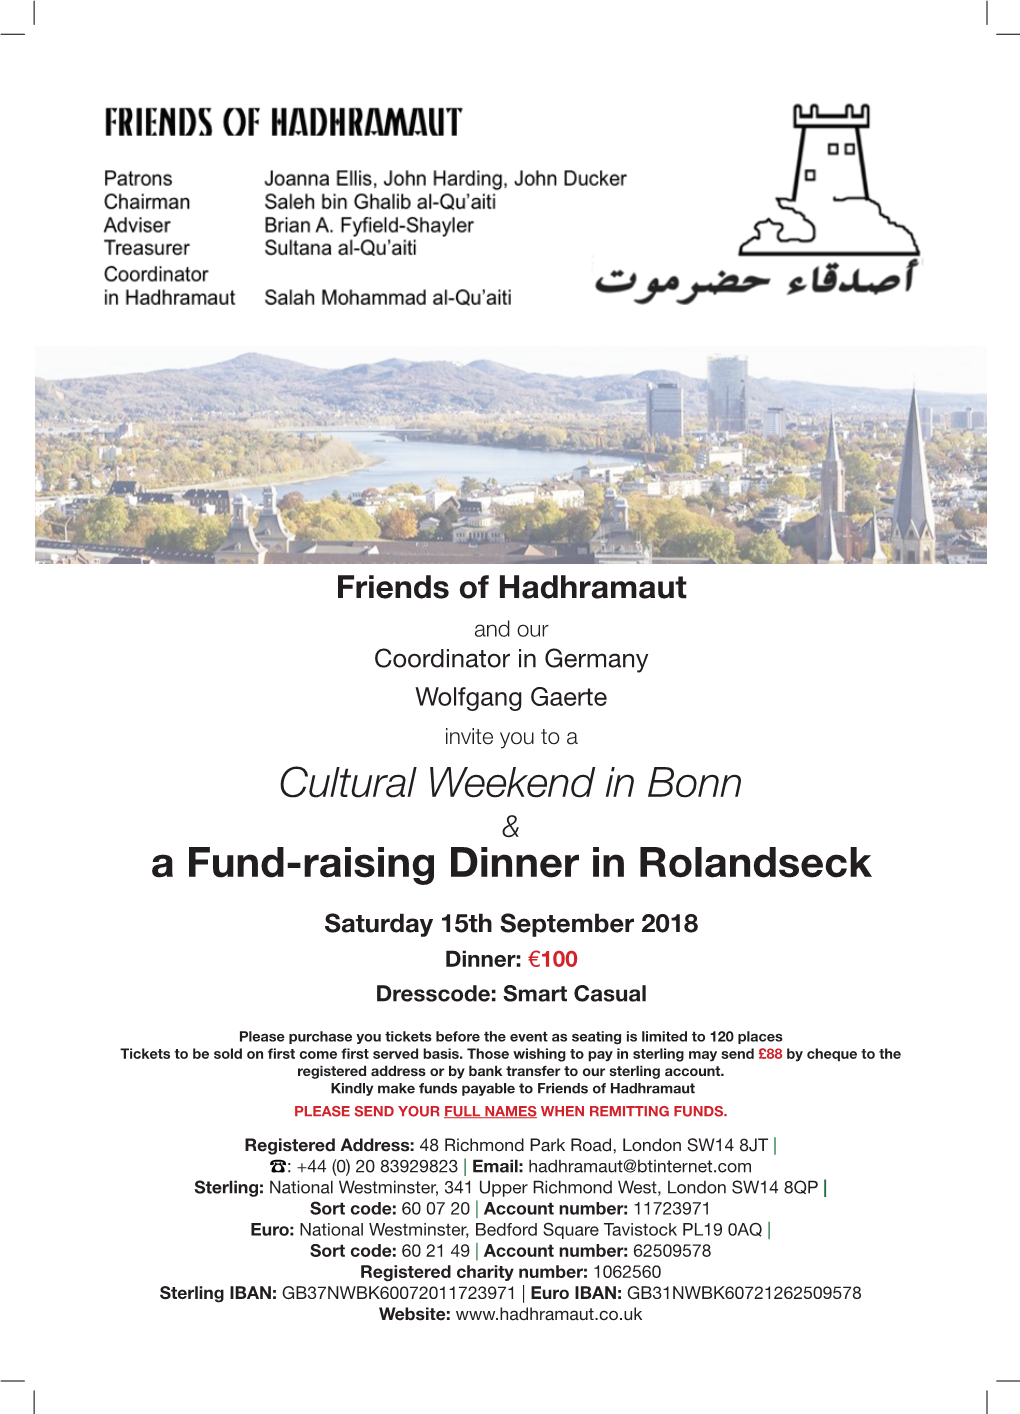 Cultural Weekend in Bonn a Fund-Raising Dinner in Rolandseck